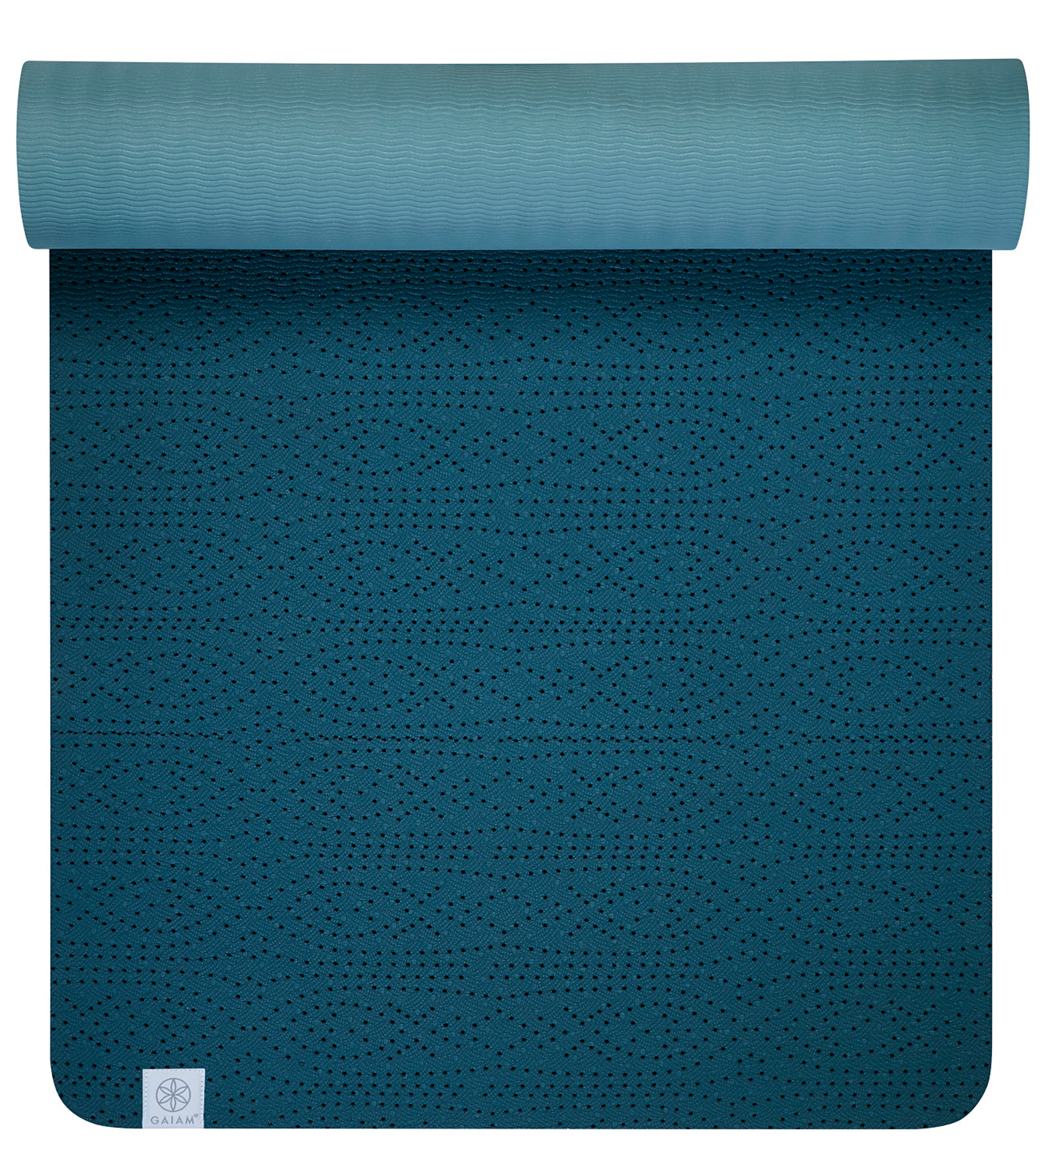 Gaiam Breathable Performance Yoga Mat